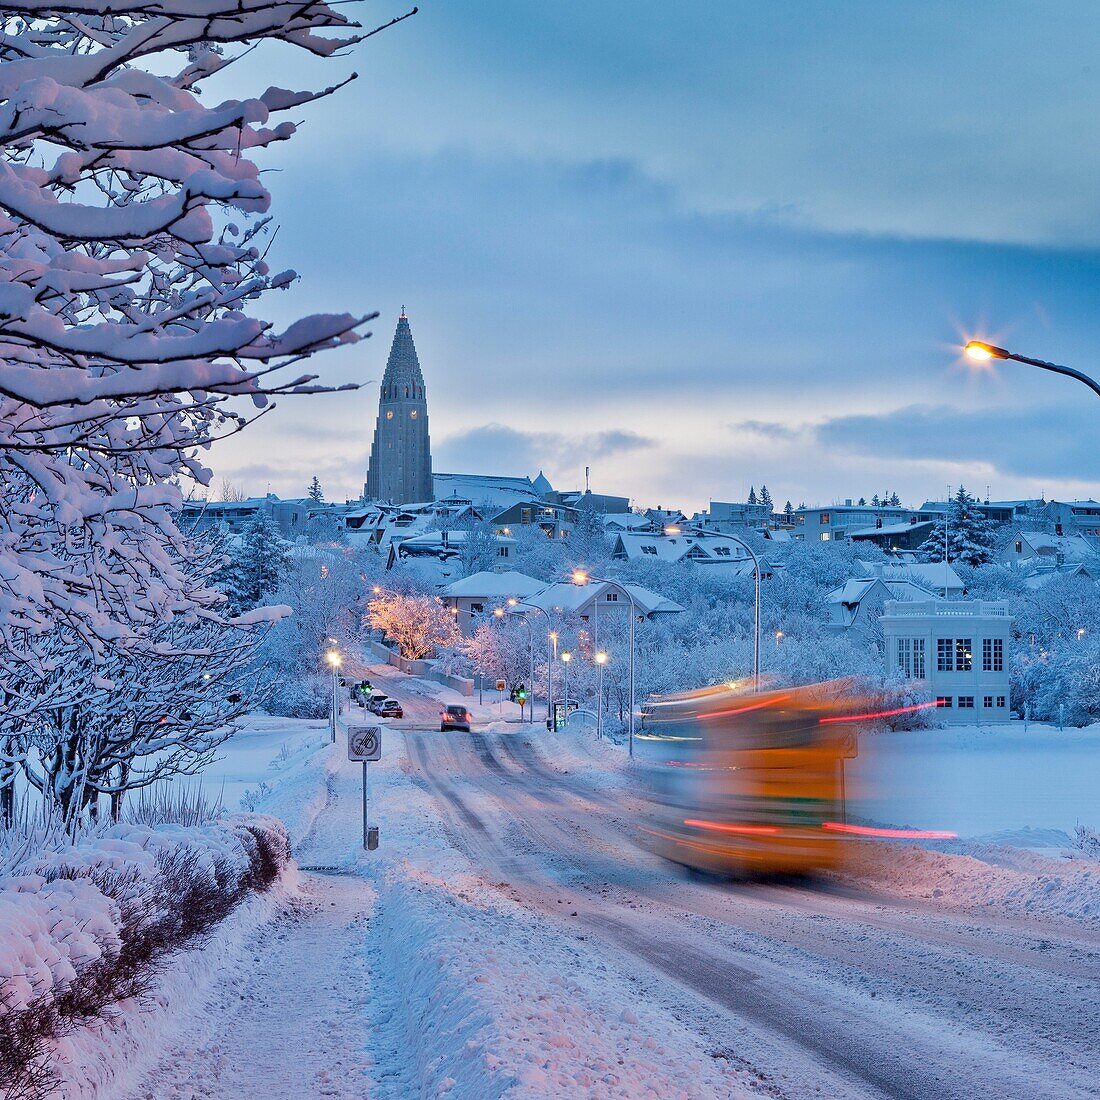 Snowy day Reykjavik, Iceland Hallgrimskirkja church in the distance